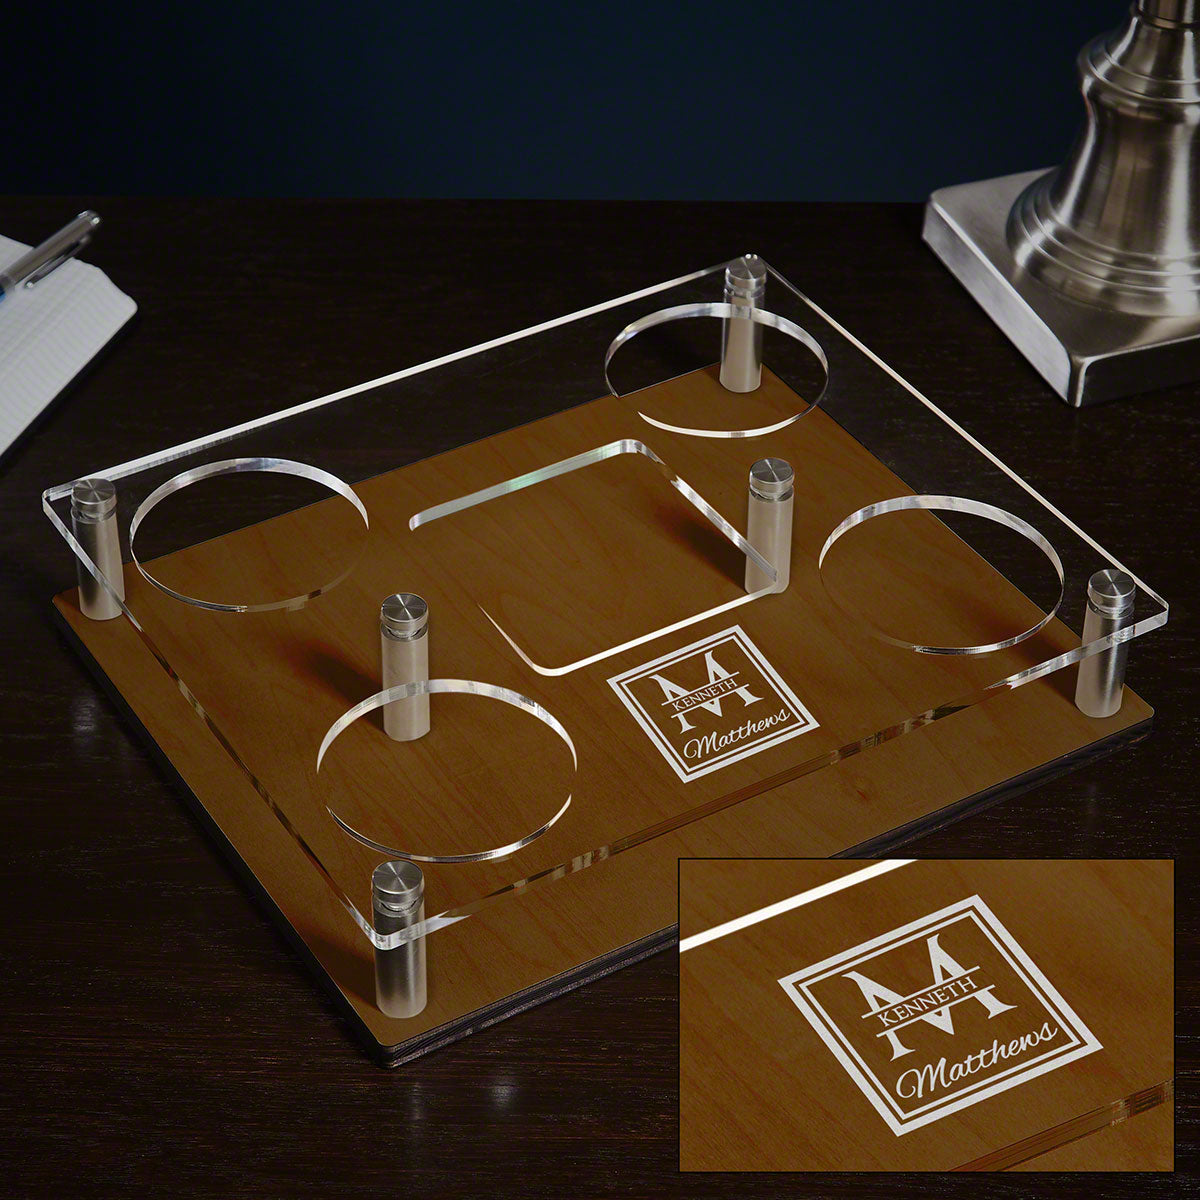 Monogrammed Presentation Set with Custom Rocks Glasses & Whiskey Decanter - 6pc Walnut Serving Tray & Display Set